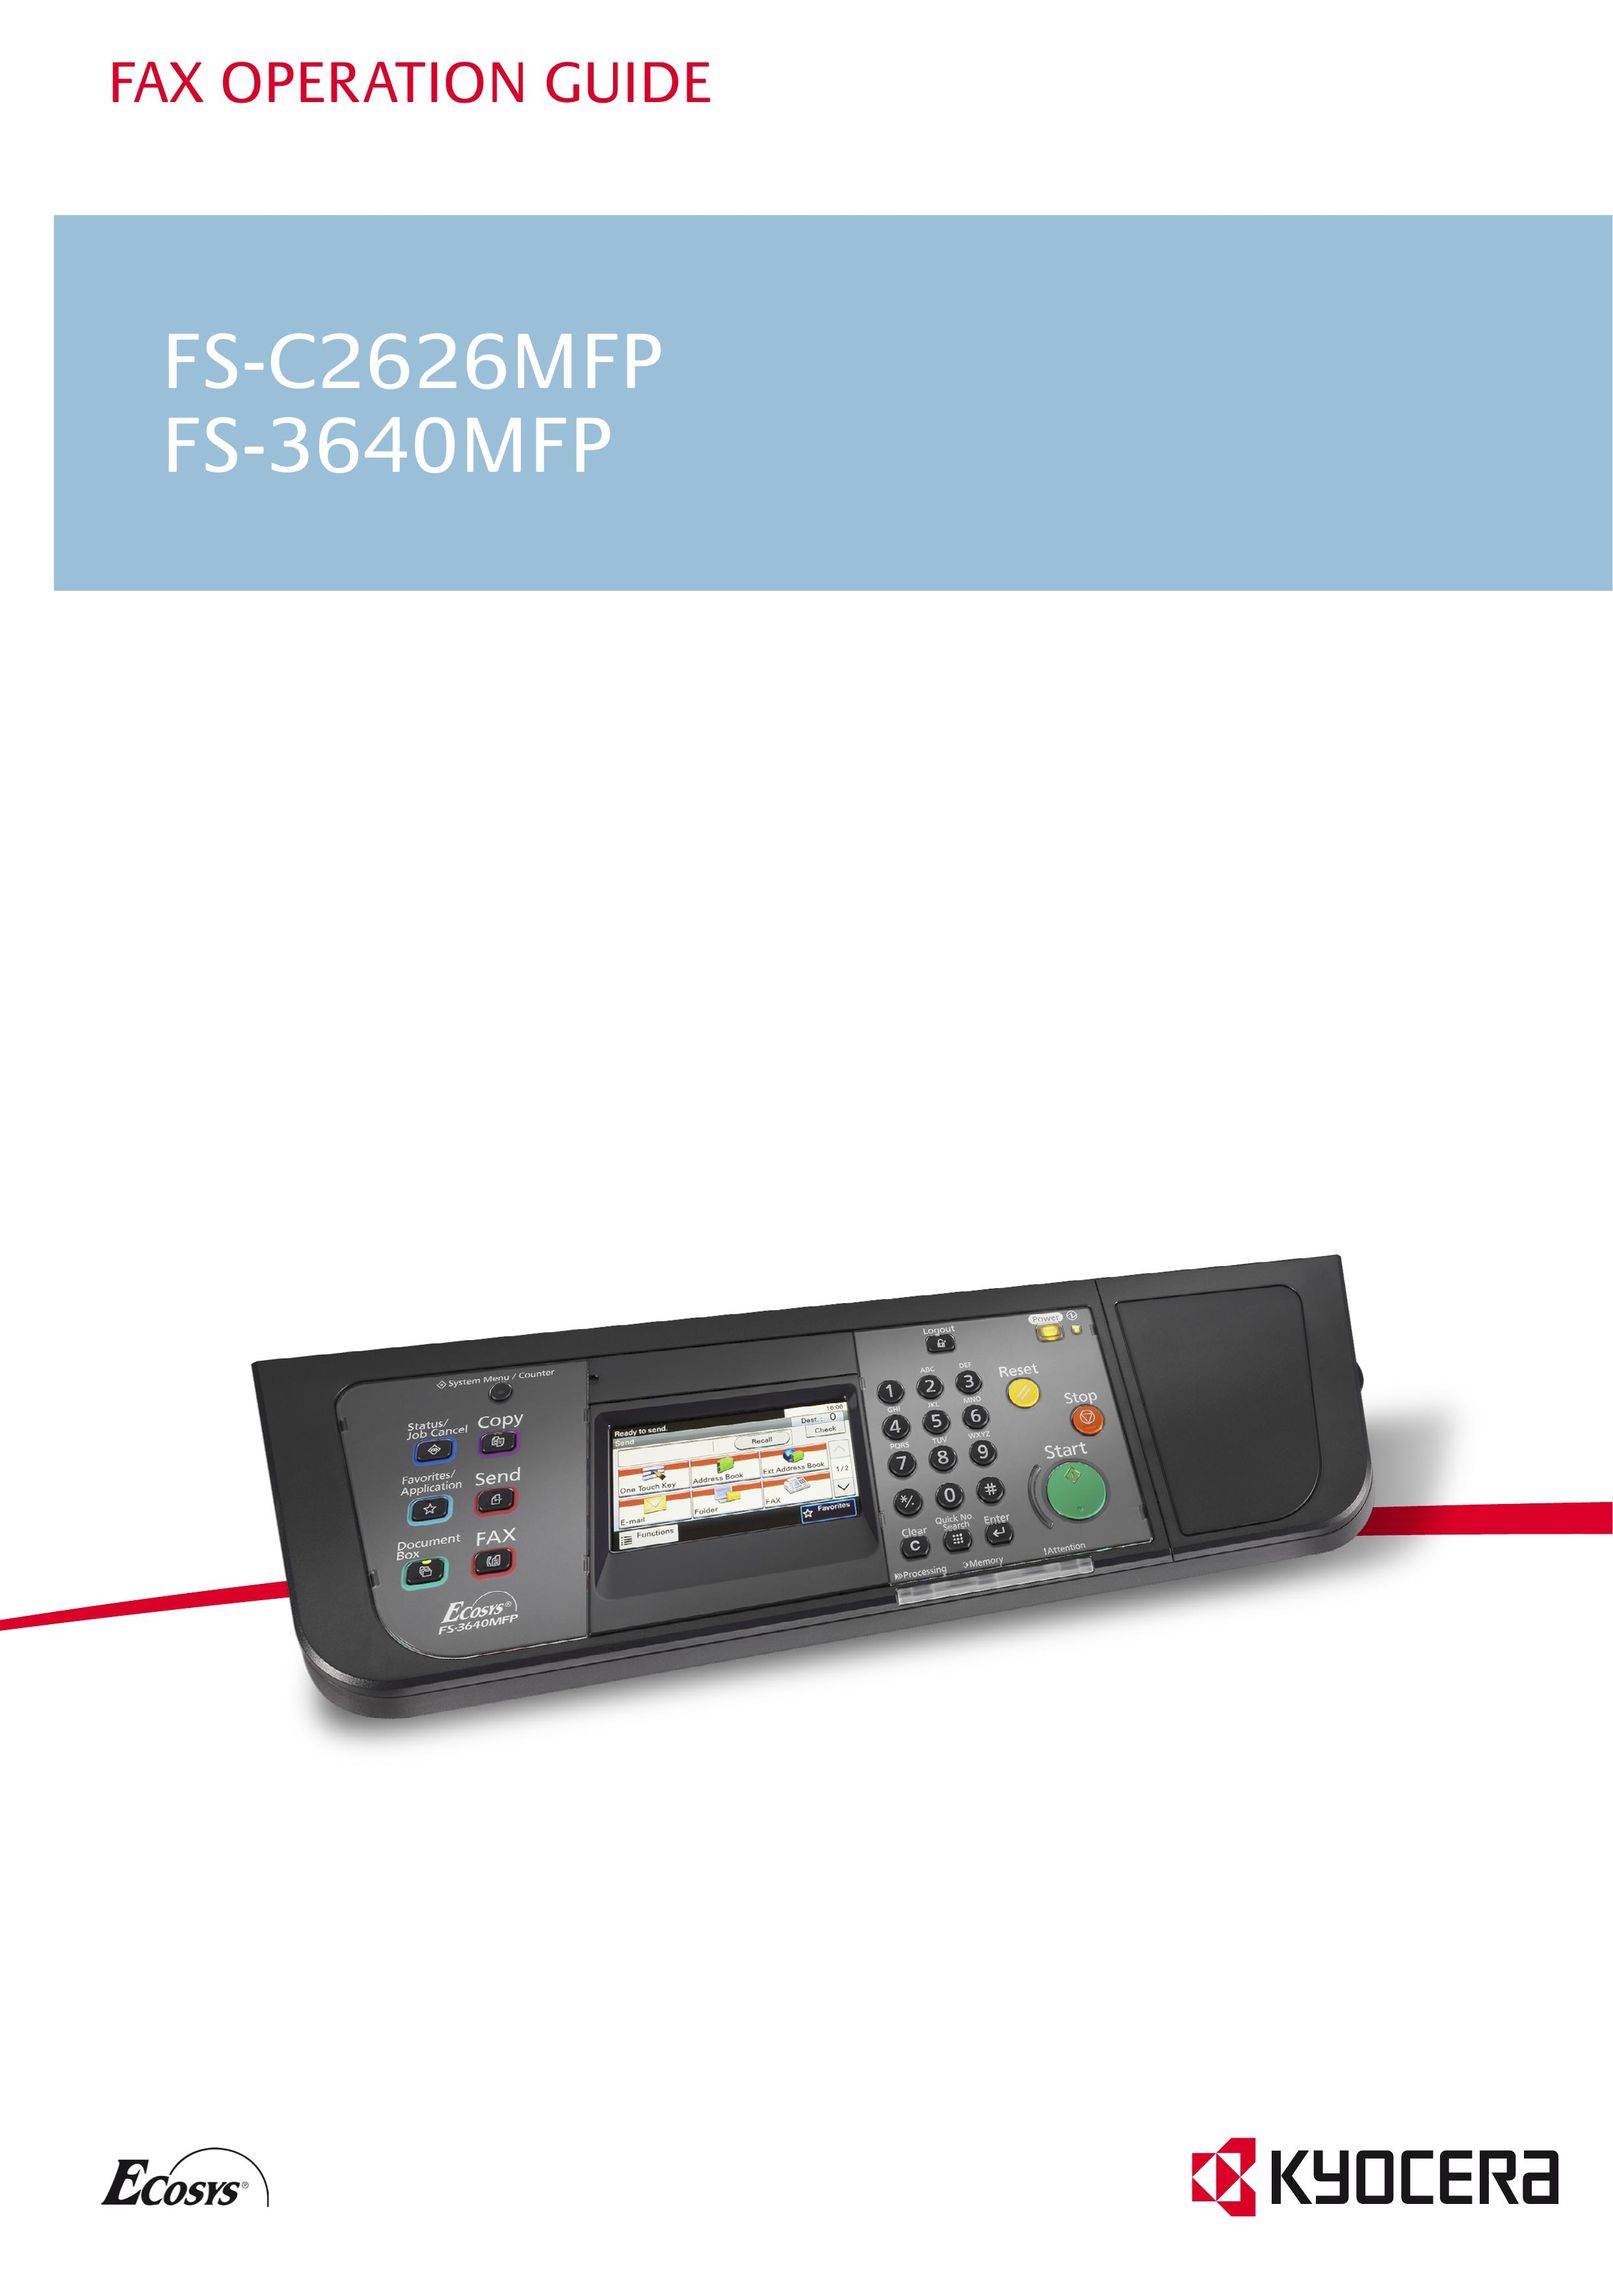 Kyocera FS-3640MFP Fax Machine User Manual